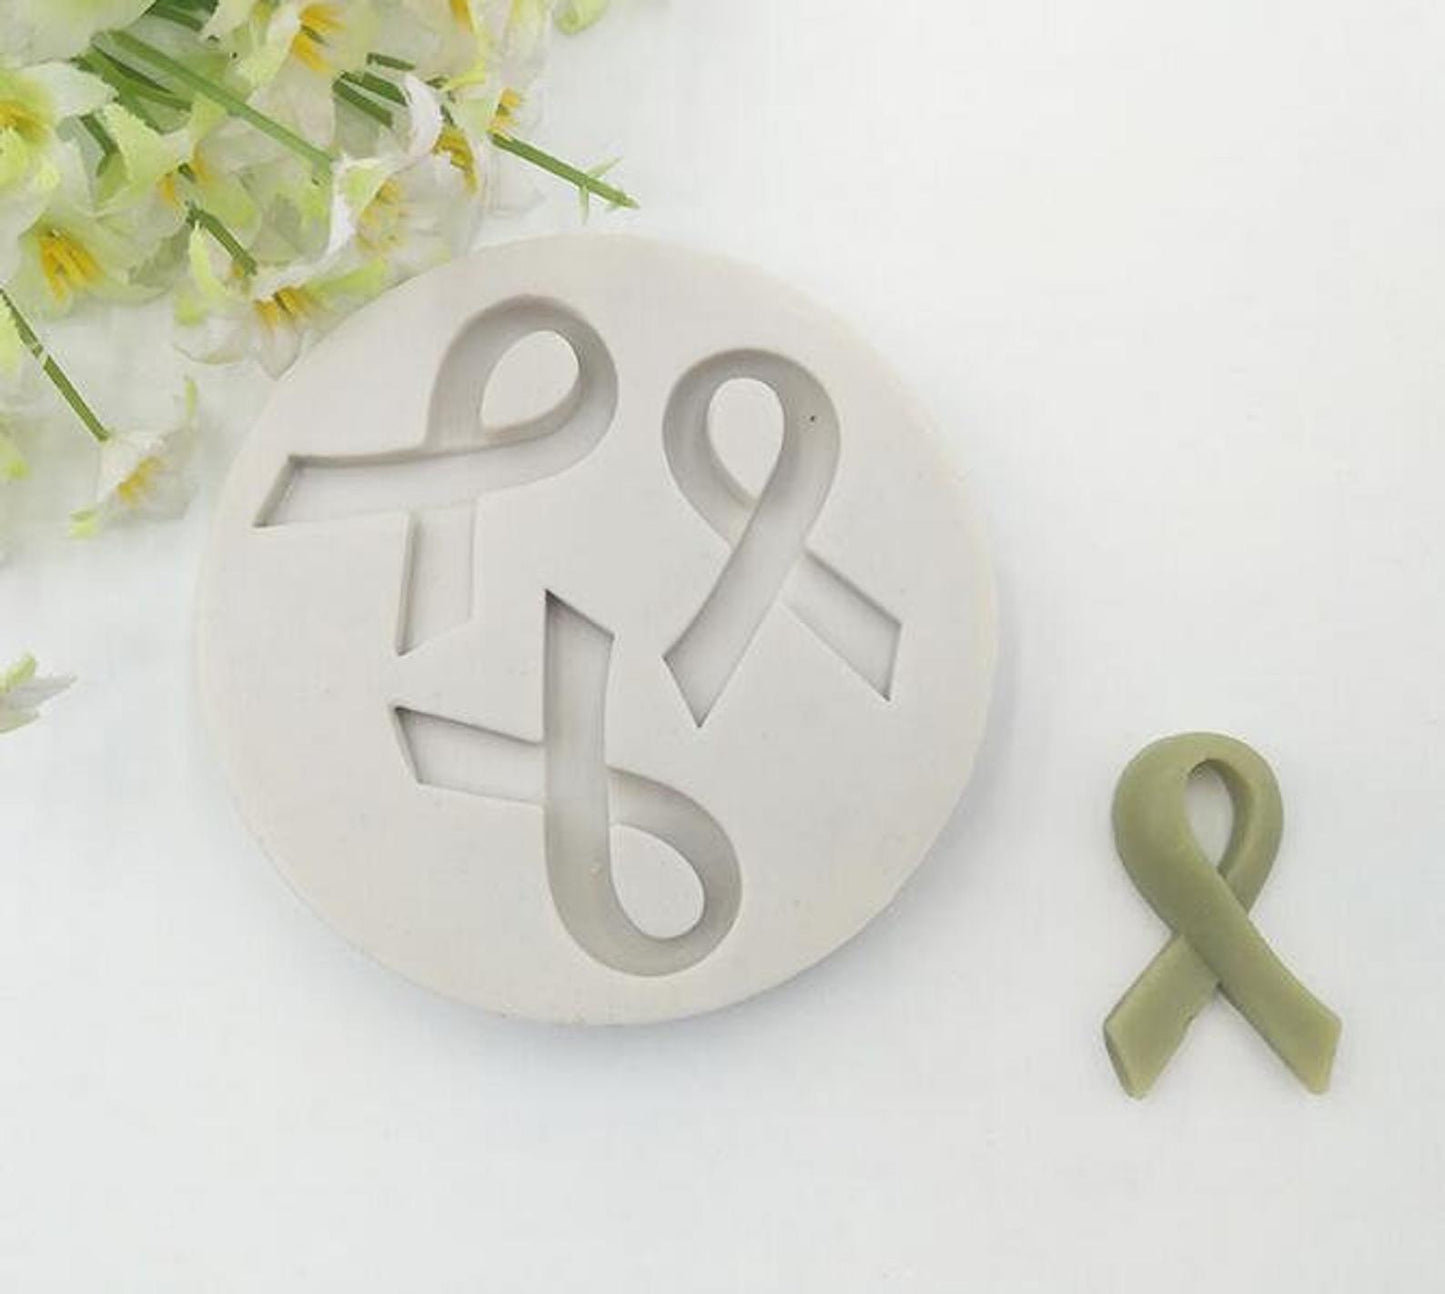 Awareness Cancer Ribbon - Silicone Mold